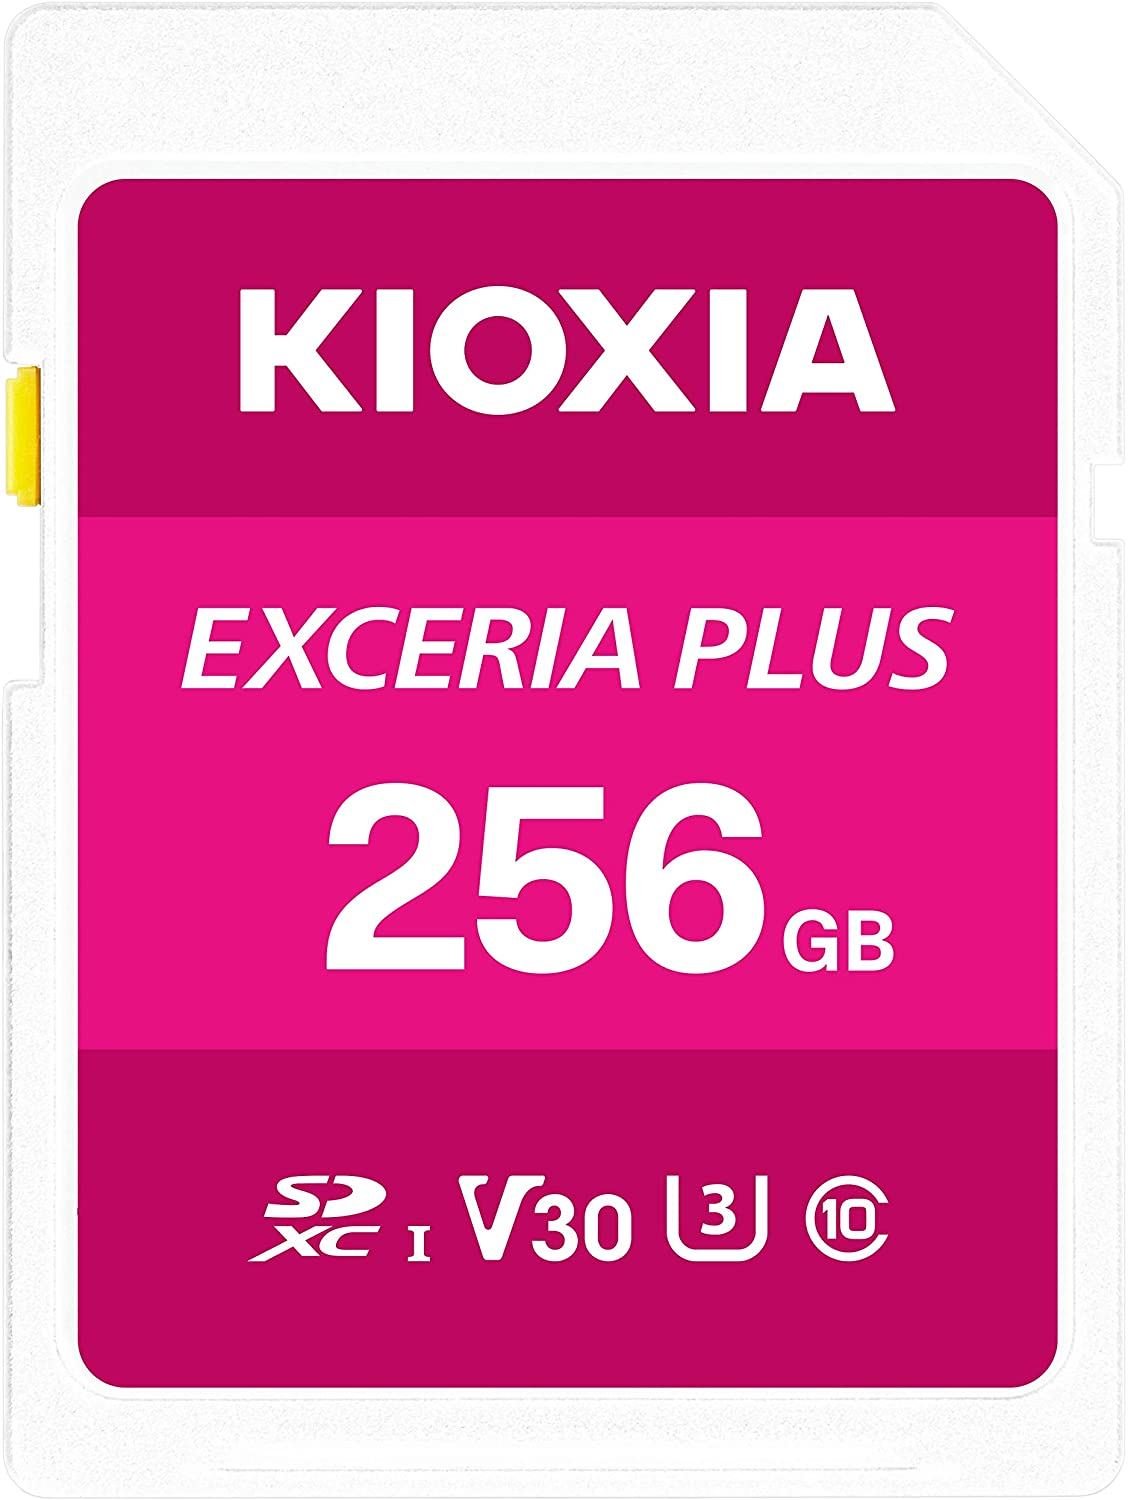 KIOXIA LNPL1M256GG4 256GB NormalSD EXCERIA PLUS C10 U3 V30 UHS1 R98 Hafıza kartı